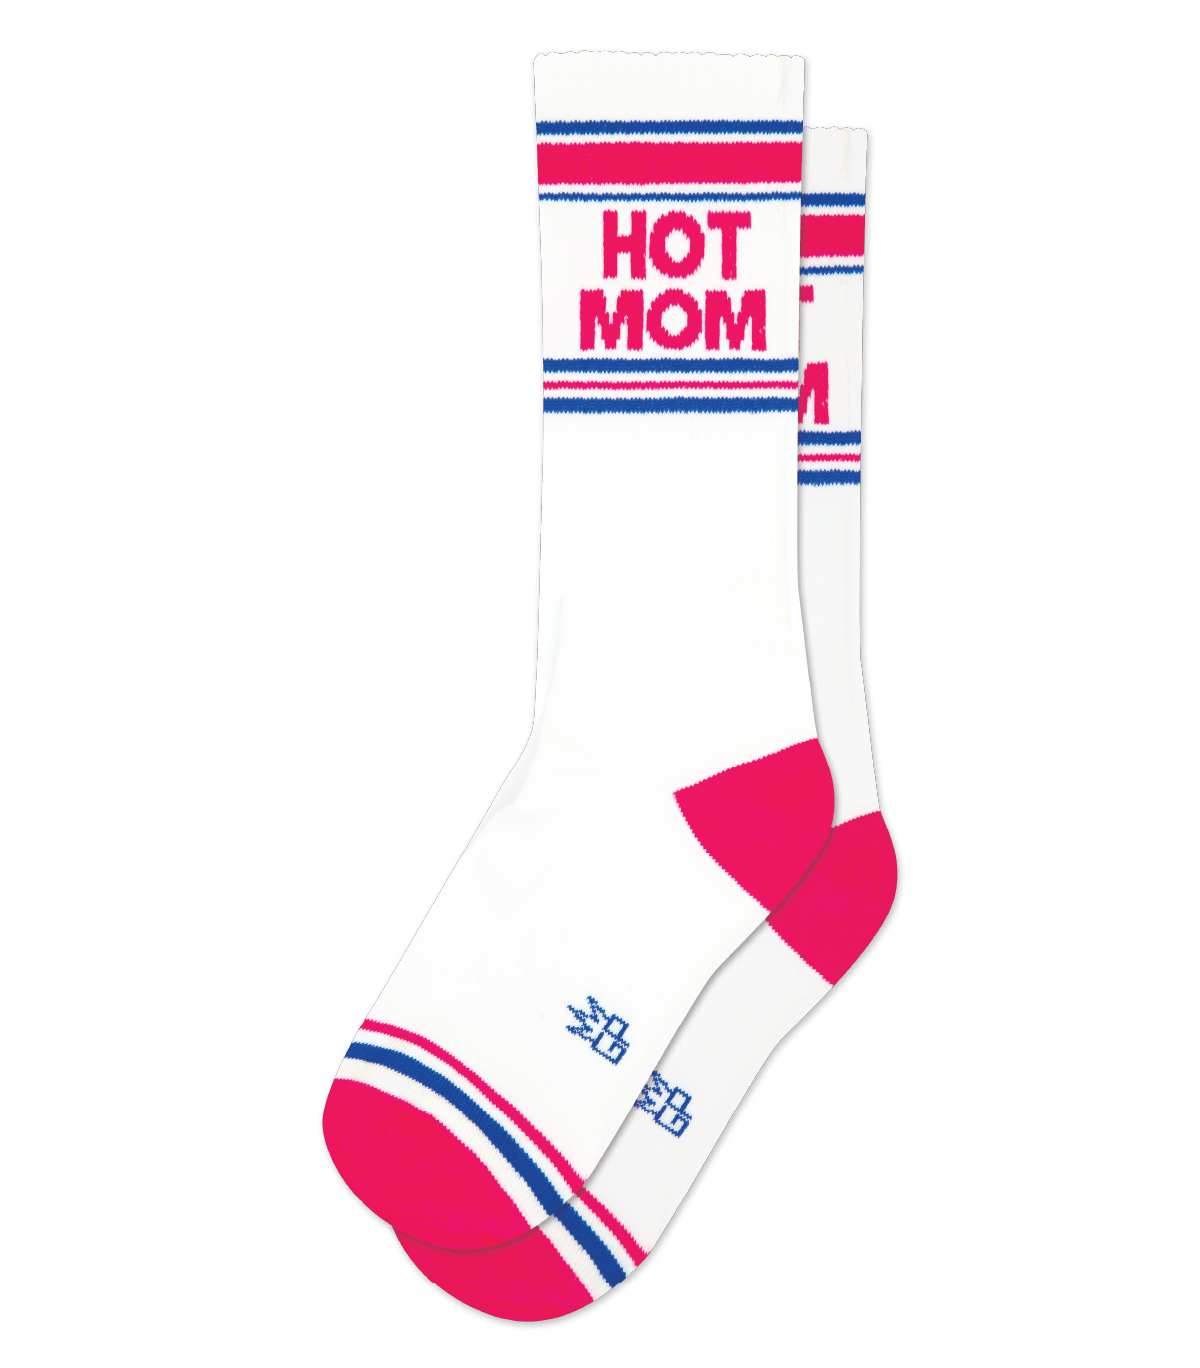 HOT MOM gym socks